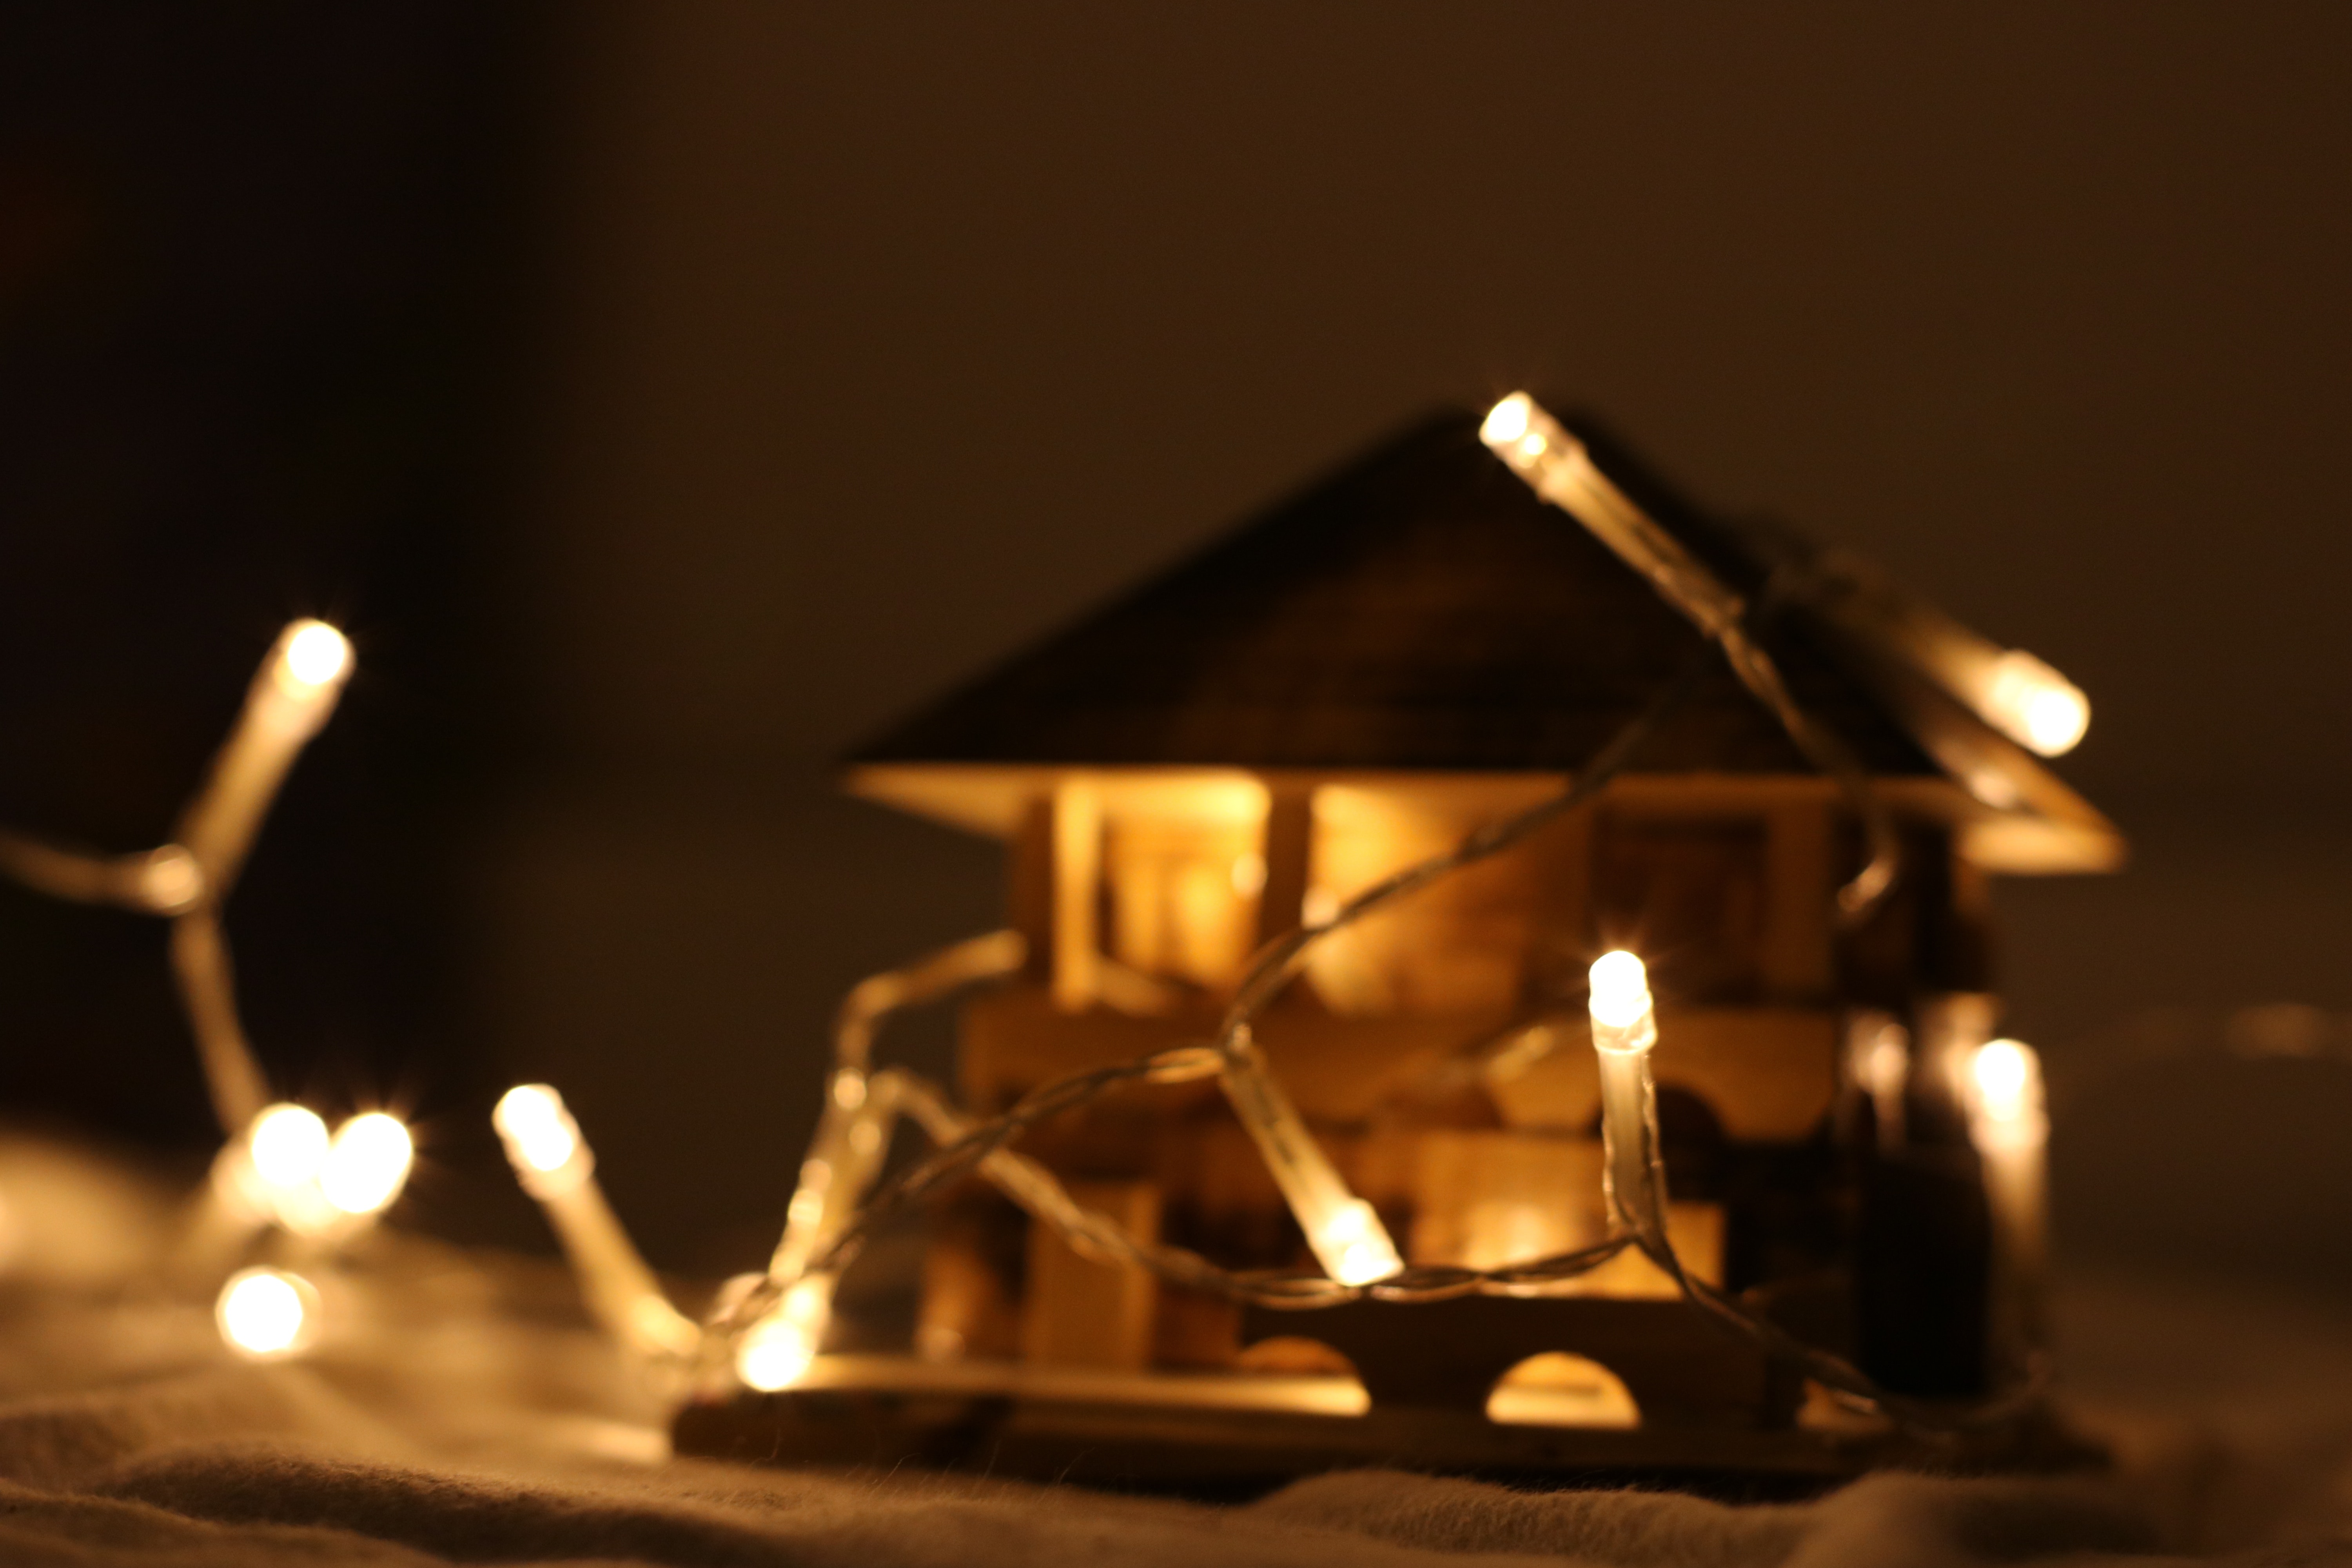 Turned on String Light on Miniature House, Art, Illuminated, Wood, Toy, HQ Photo